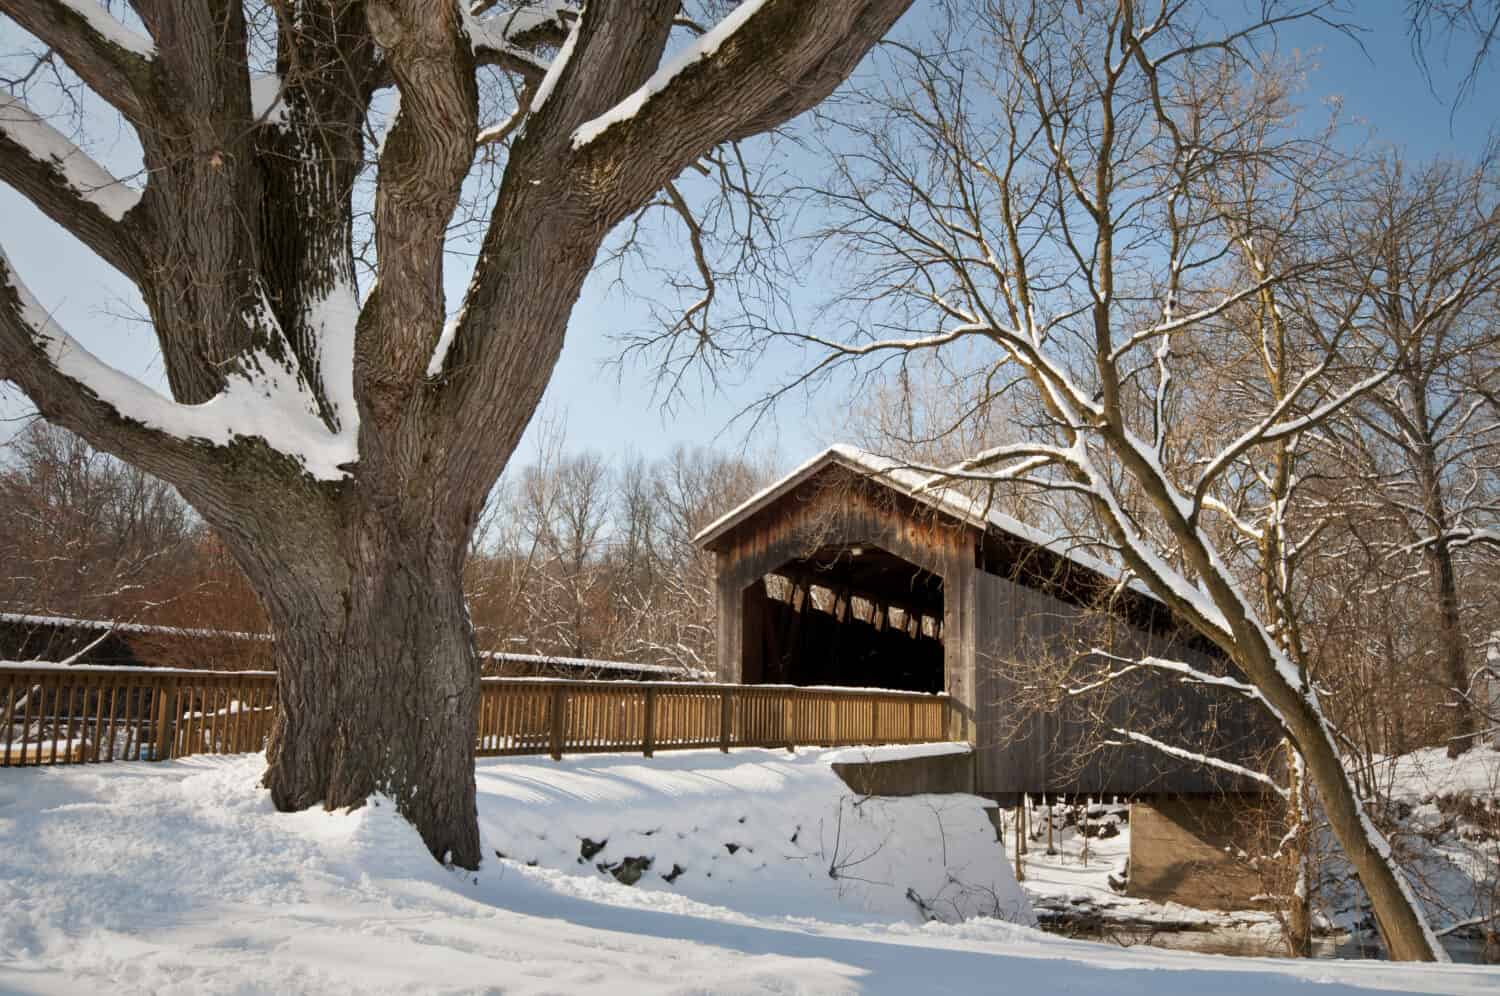 Ada Covered Bridge Wintertime at the historic Ada Covered Bridge in Kent County, Michigan.